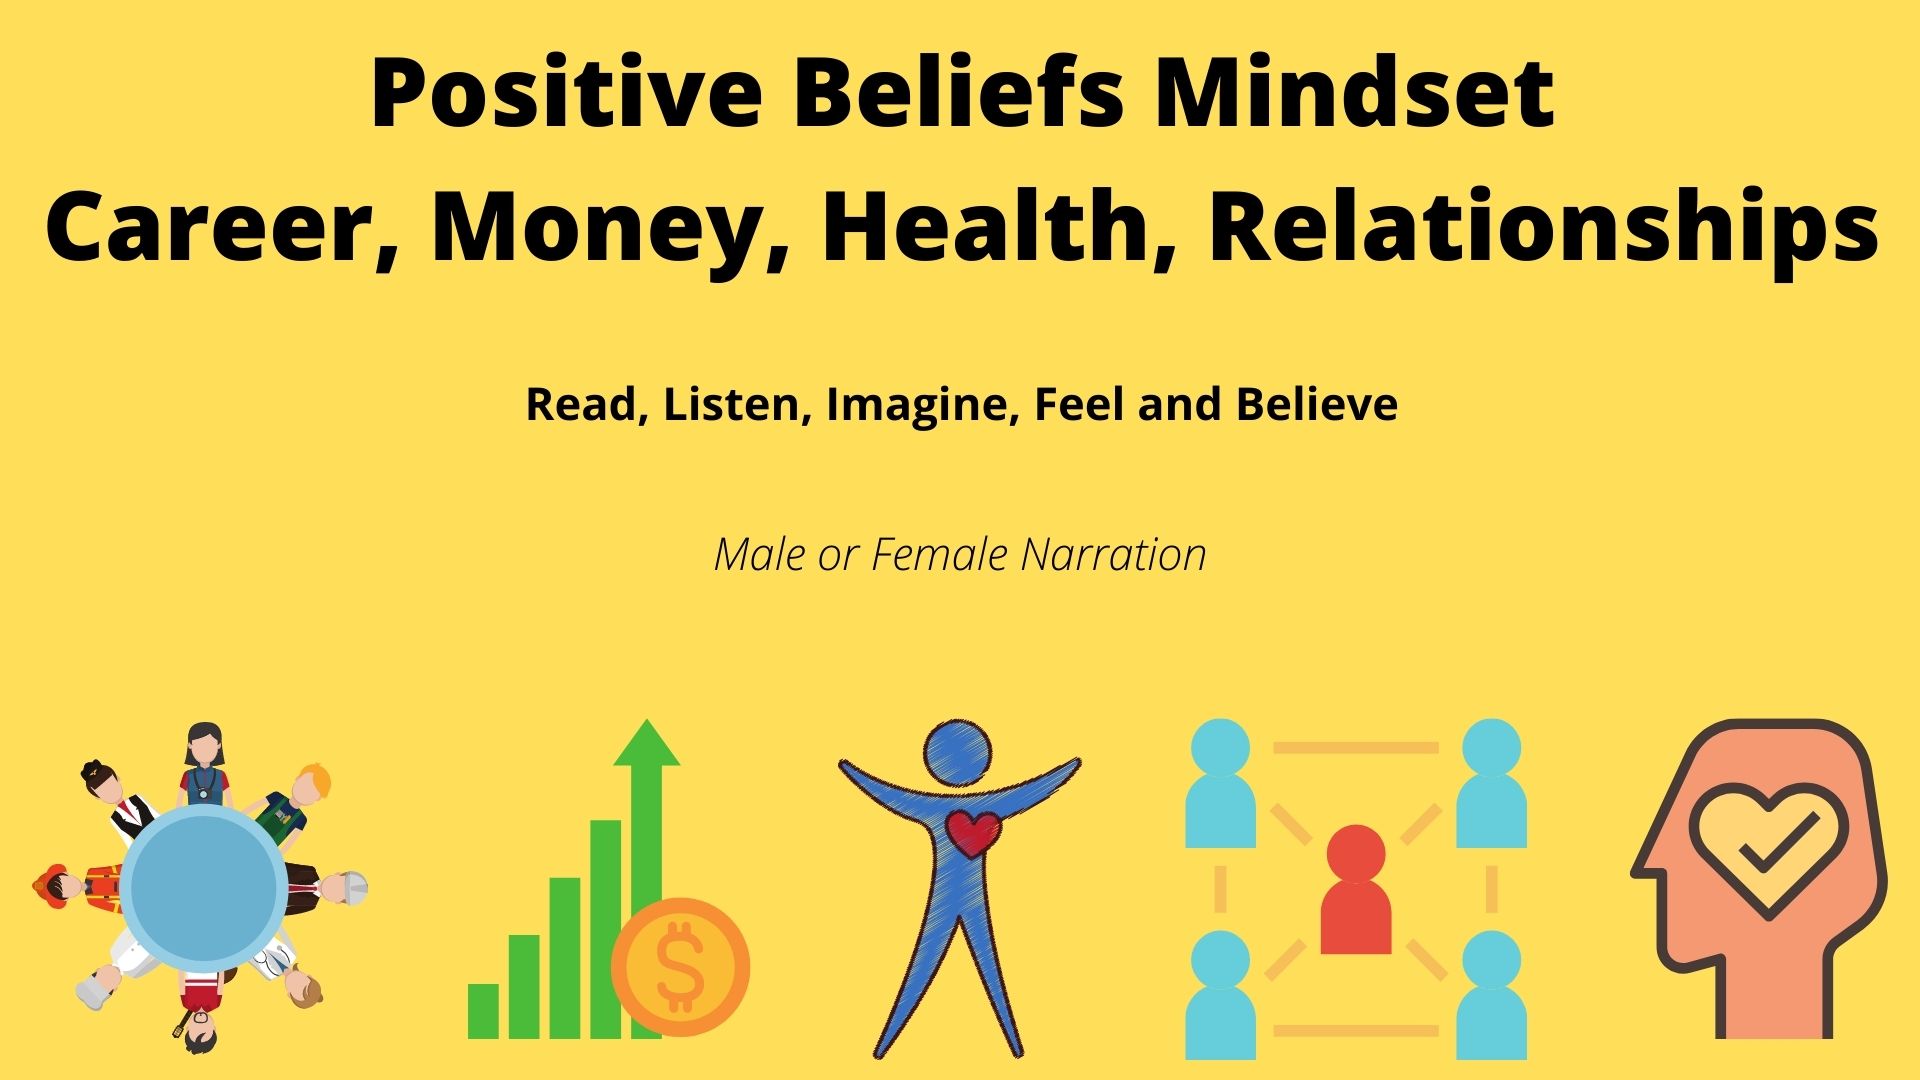 Positive Beliefs Mindsets - Career, Money, Health and Relationships